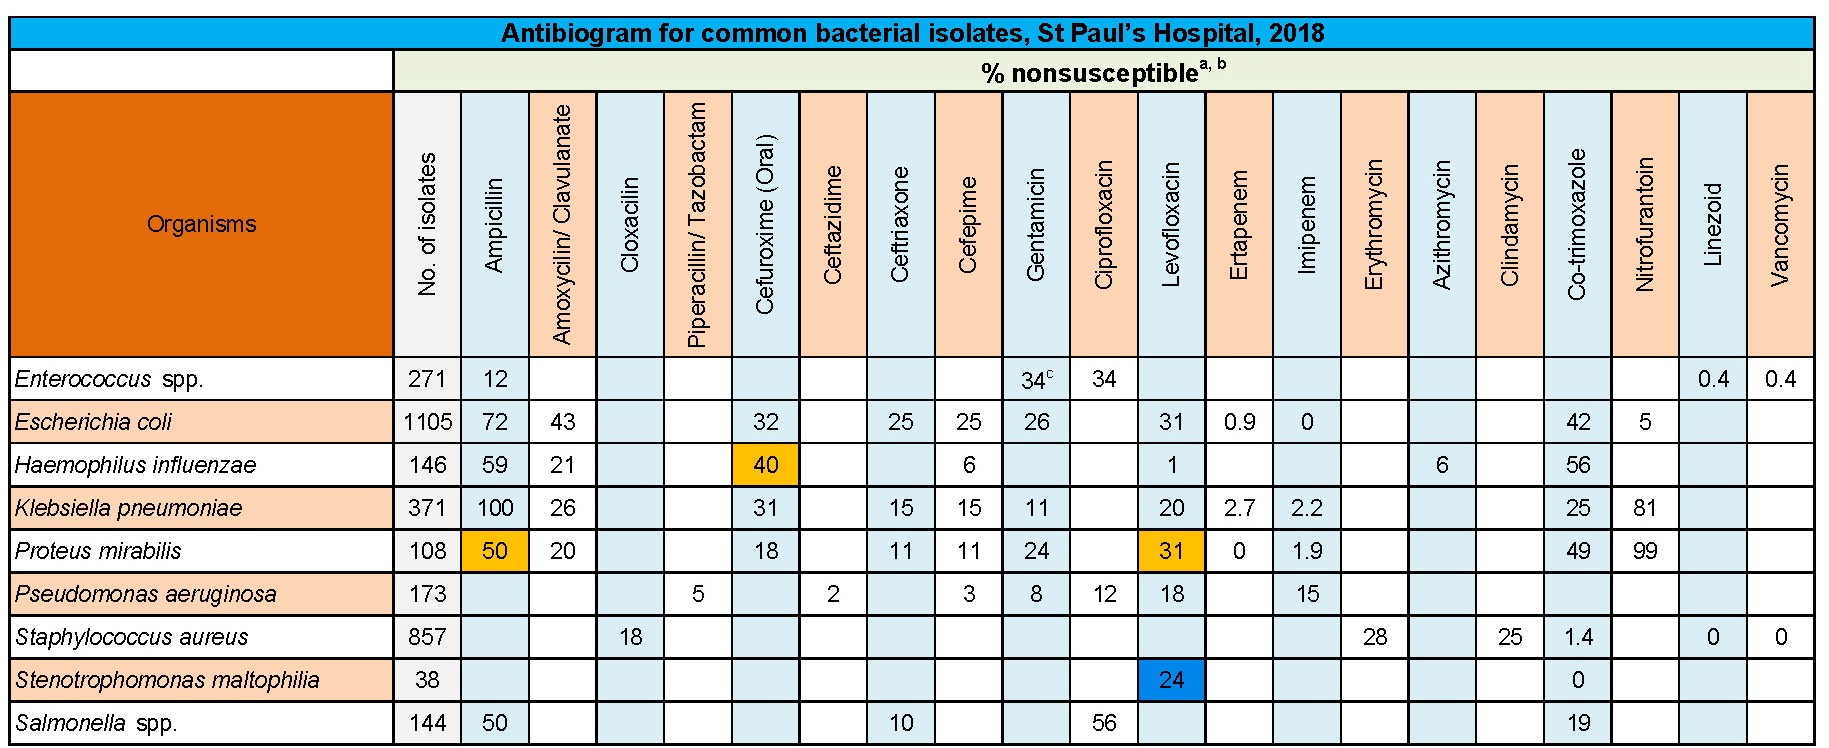 Table StPaul. Antibiogram for common bacterial isolates, St. Paul's Hospital, 2018